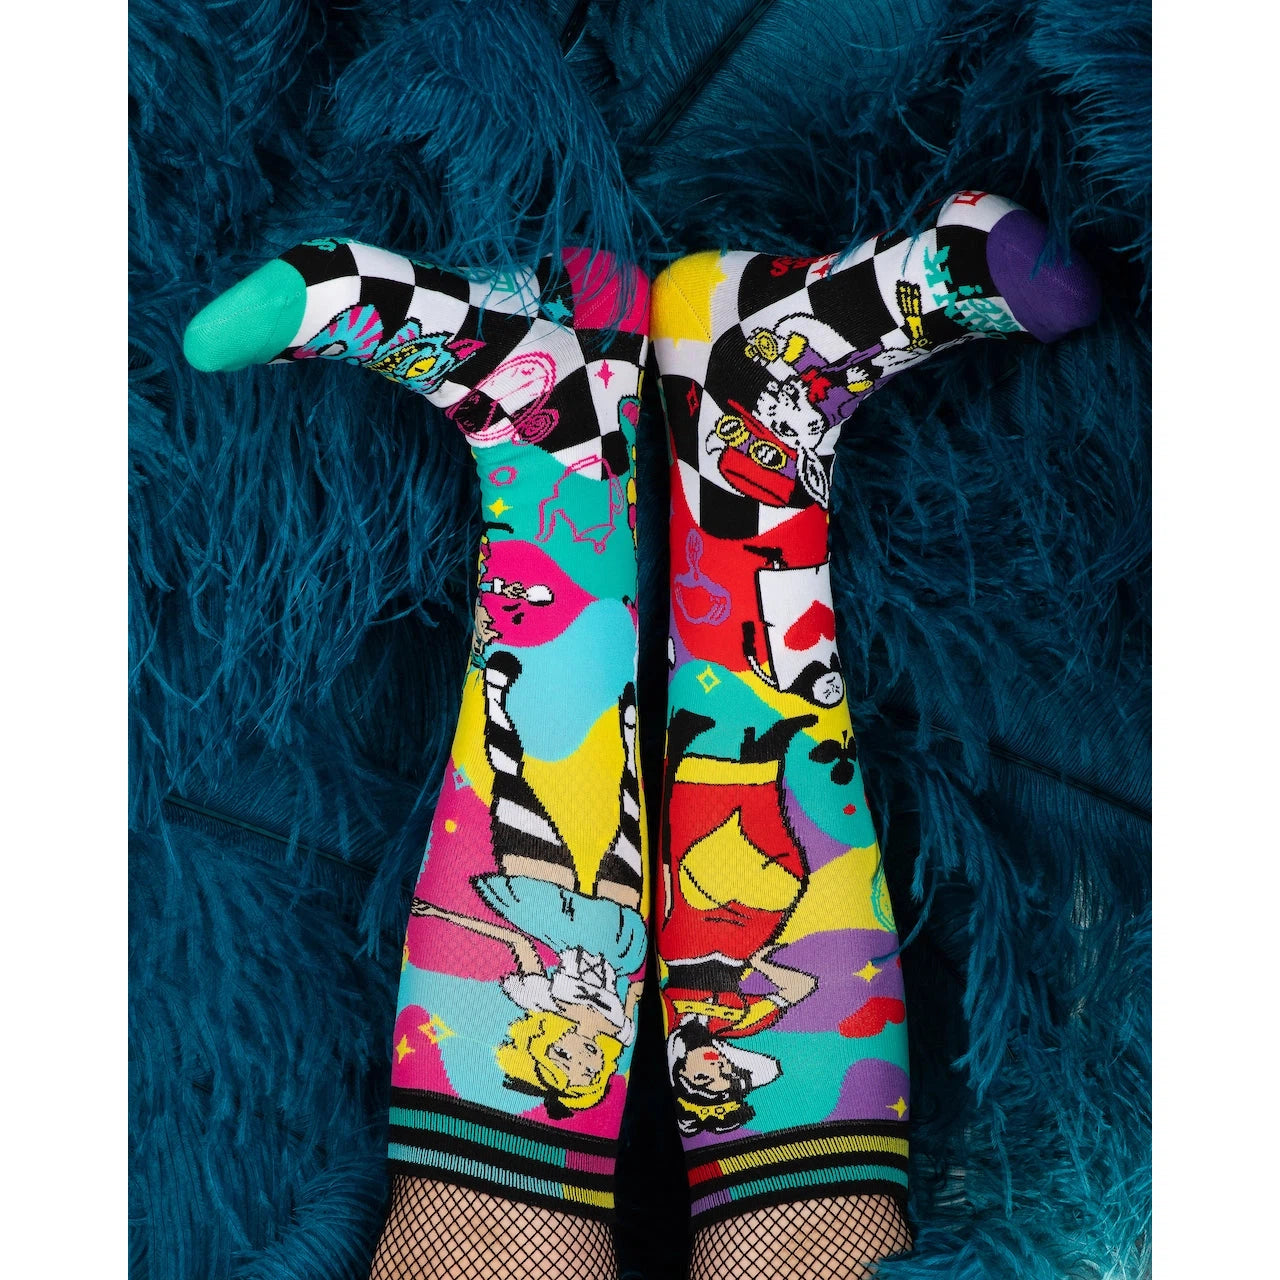 Down The Rabbit Hole Alice in Wonderland Themed Wild Knee High Socks